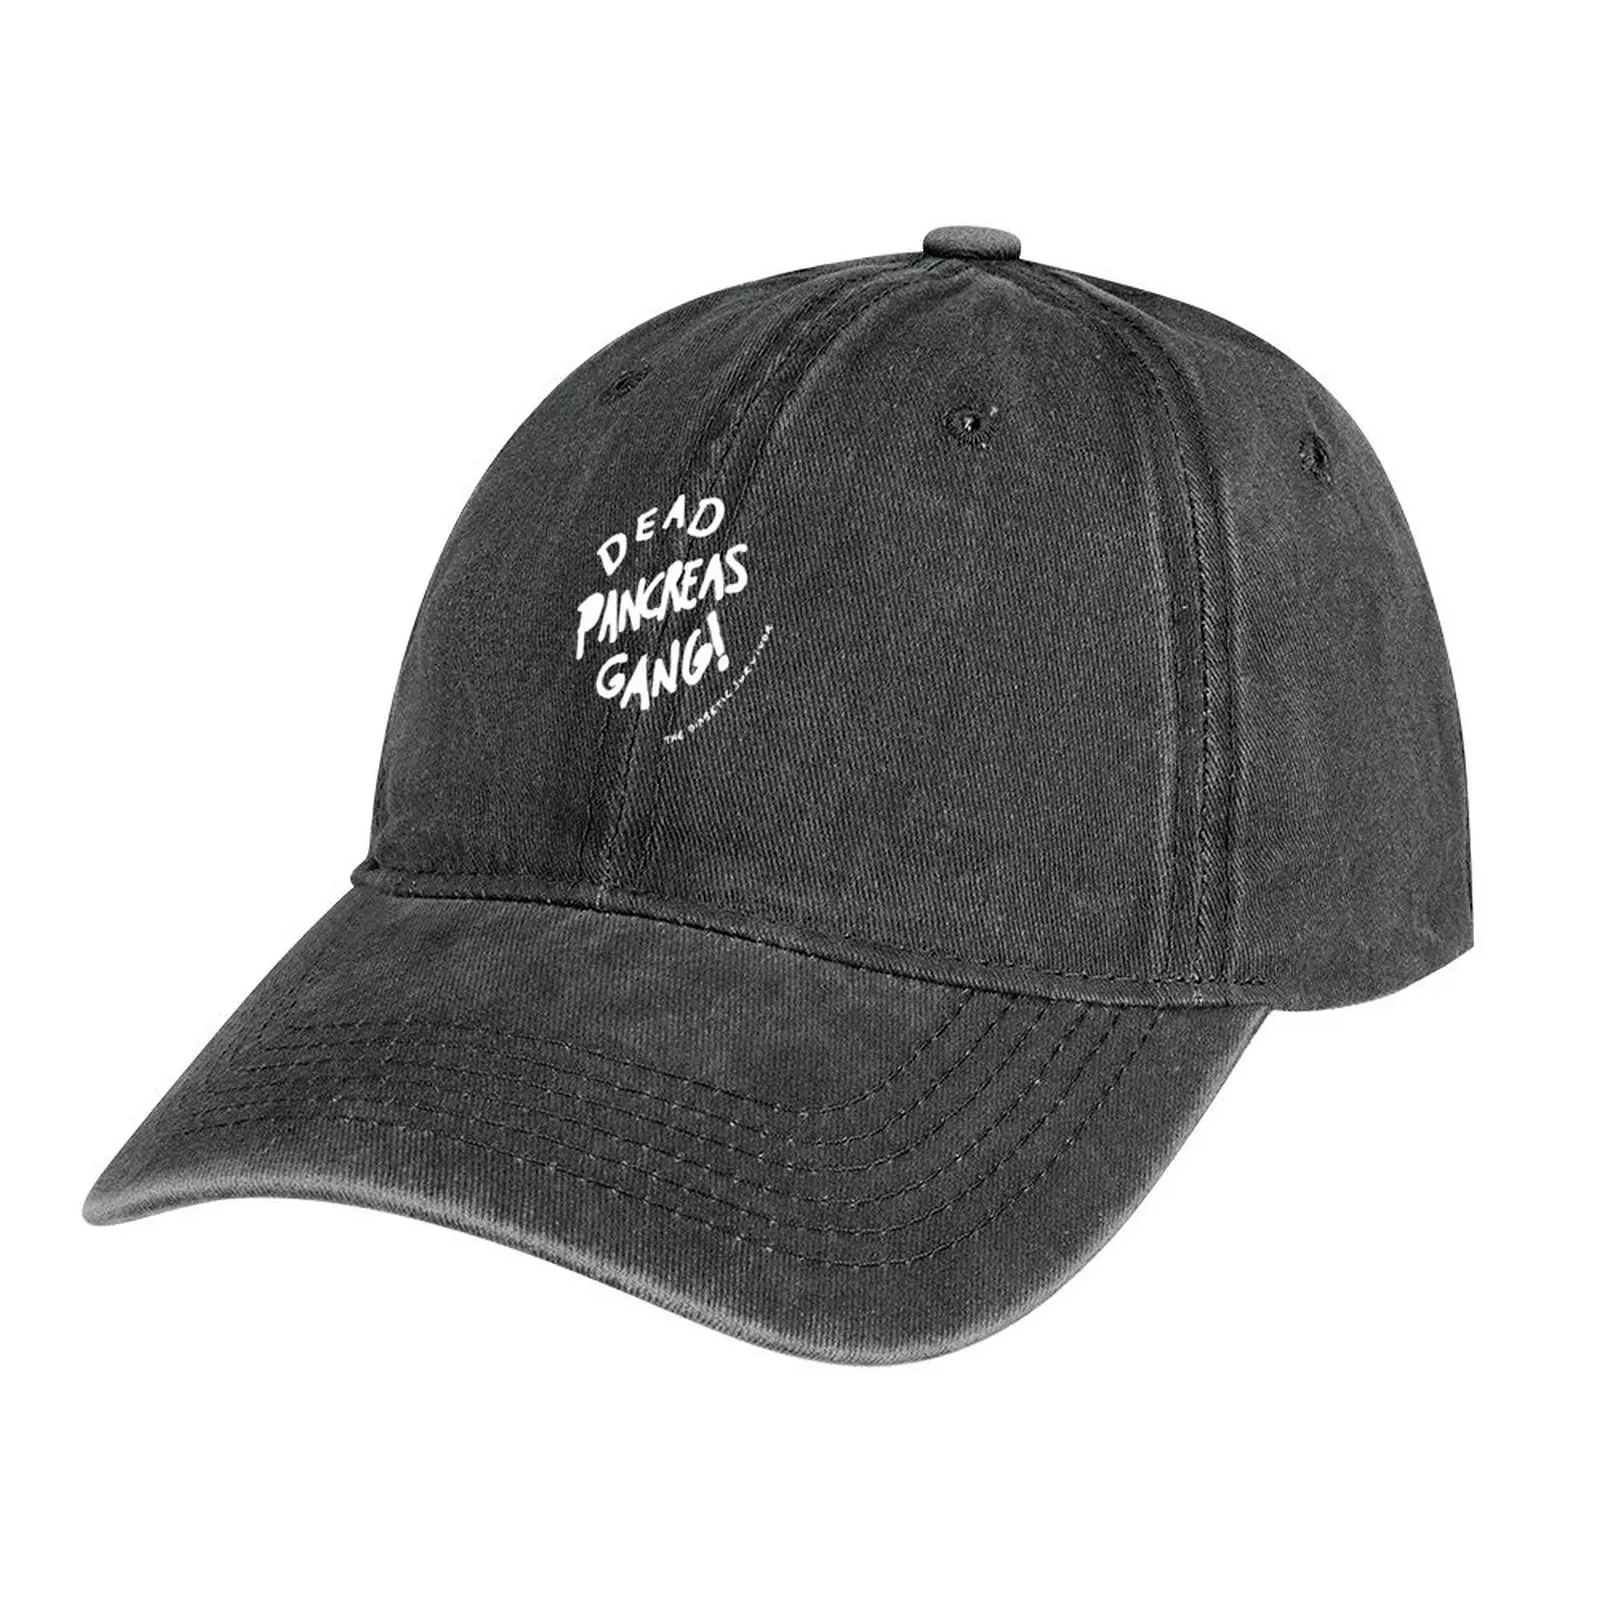 

Dead Pancreas Gang - Dead Pancreas Society Cowboy Hat hiking hat Sunhat funny hat Trucker Girl Men's